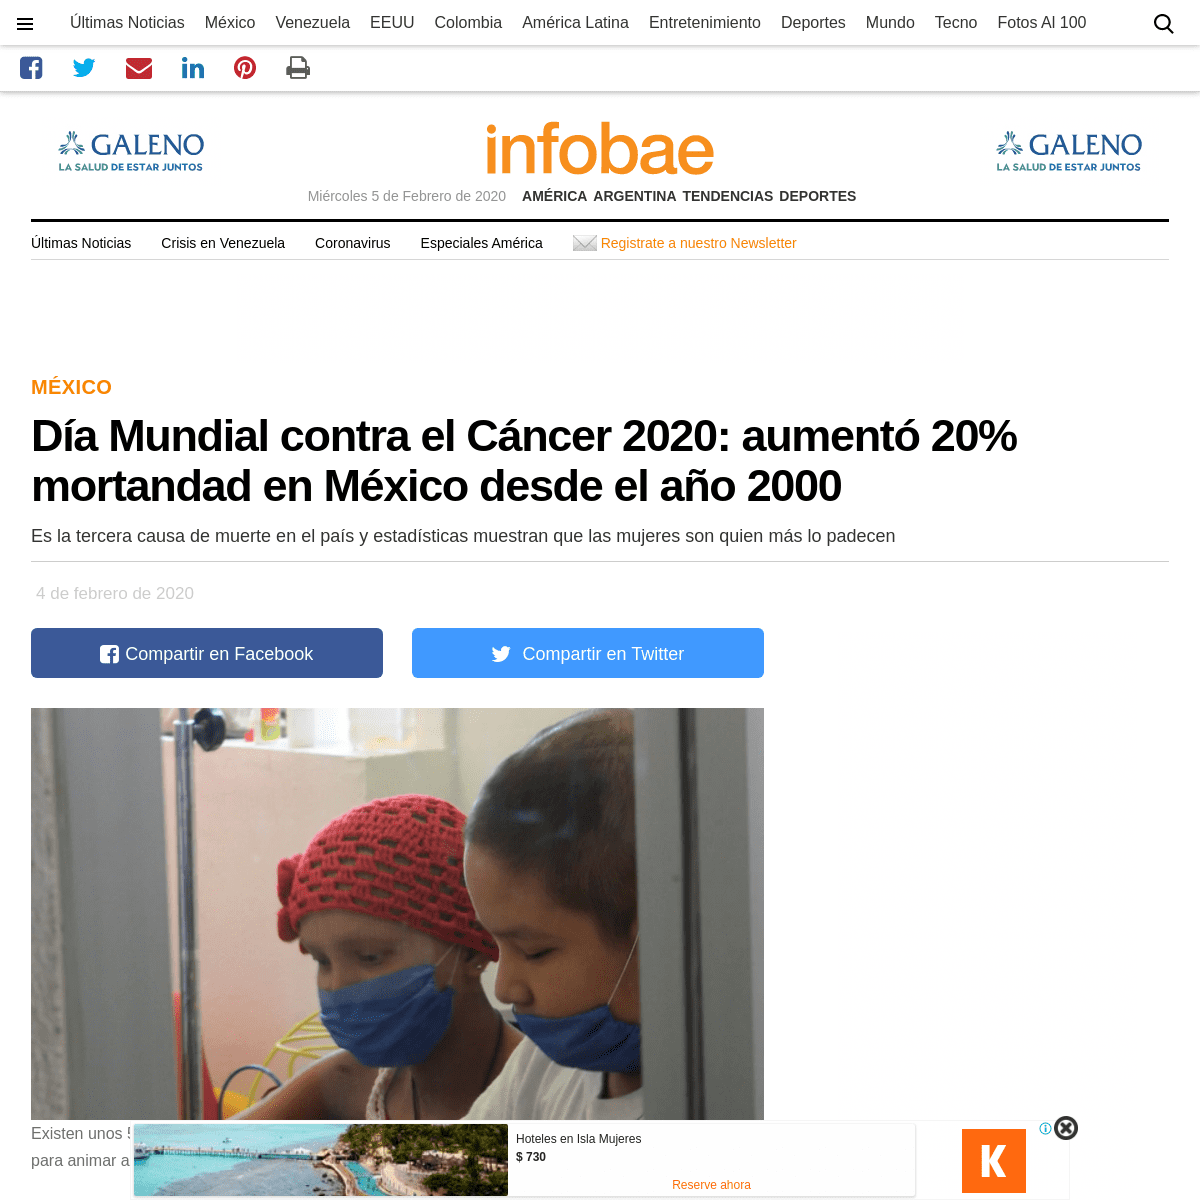 A complete backup of www.infobae.com/america/mexico/2020/02/04/dia-mundial-contra-el-cancer-2020-aumento-20-mortandad-en-mexico-